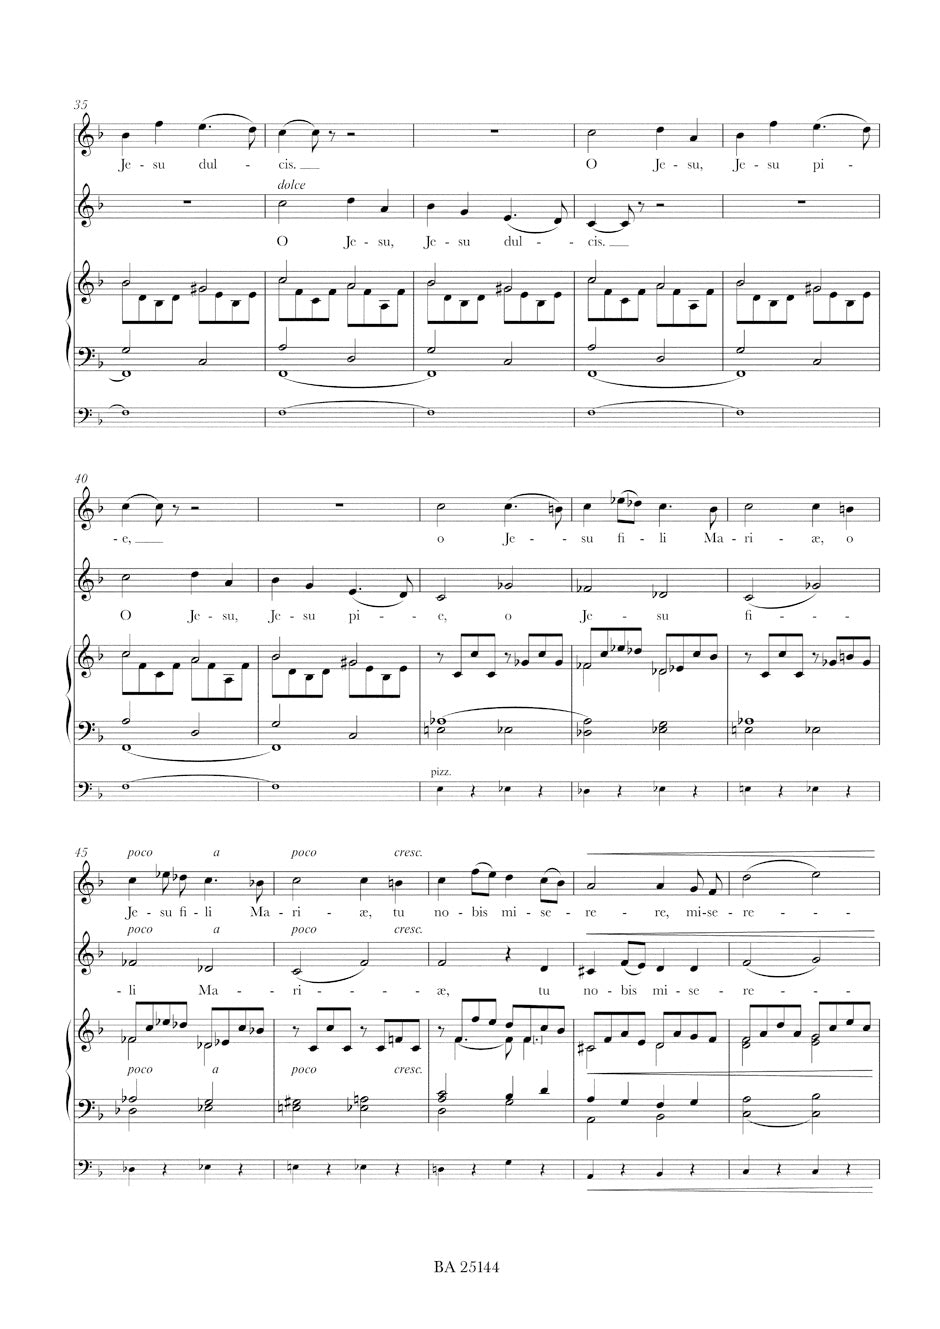 Fauré: Ave verum, Op. 65, No. 1, N 123